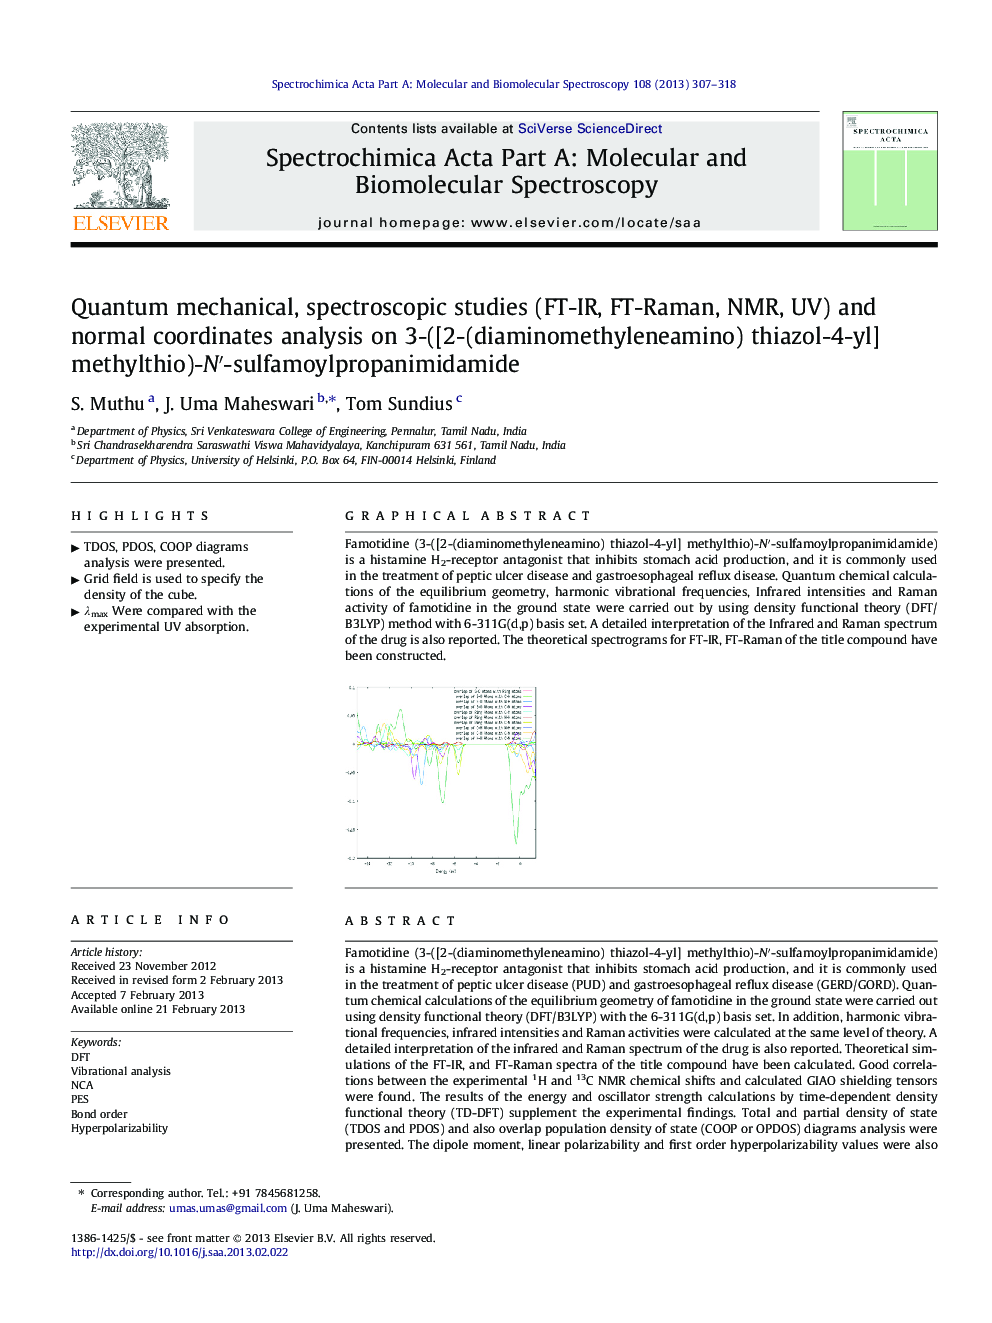 Quantum mechanical, spectroscopic studies (FT-IR, FT-Raman, NMR, UV) and normal coordinates analysis on 3-([2-(diaminomethyleneamino) thiazol-4-yl] methylthio)-N′-sulfamoylpropanimidamide